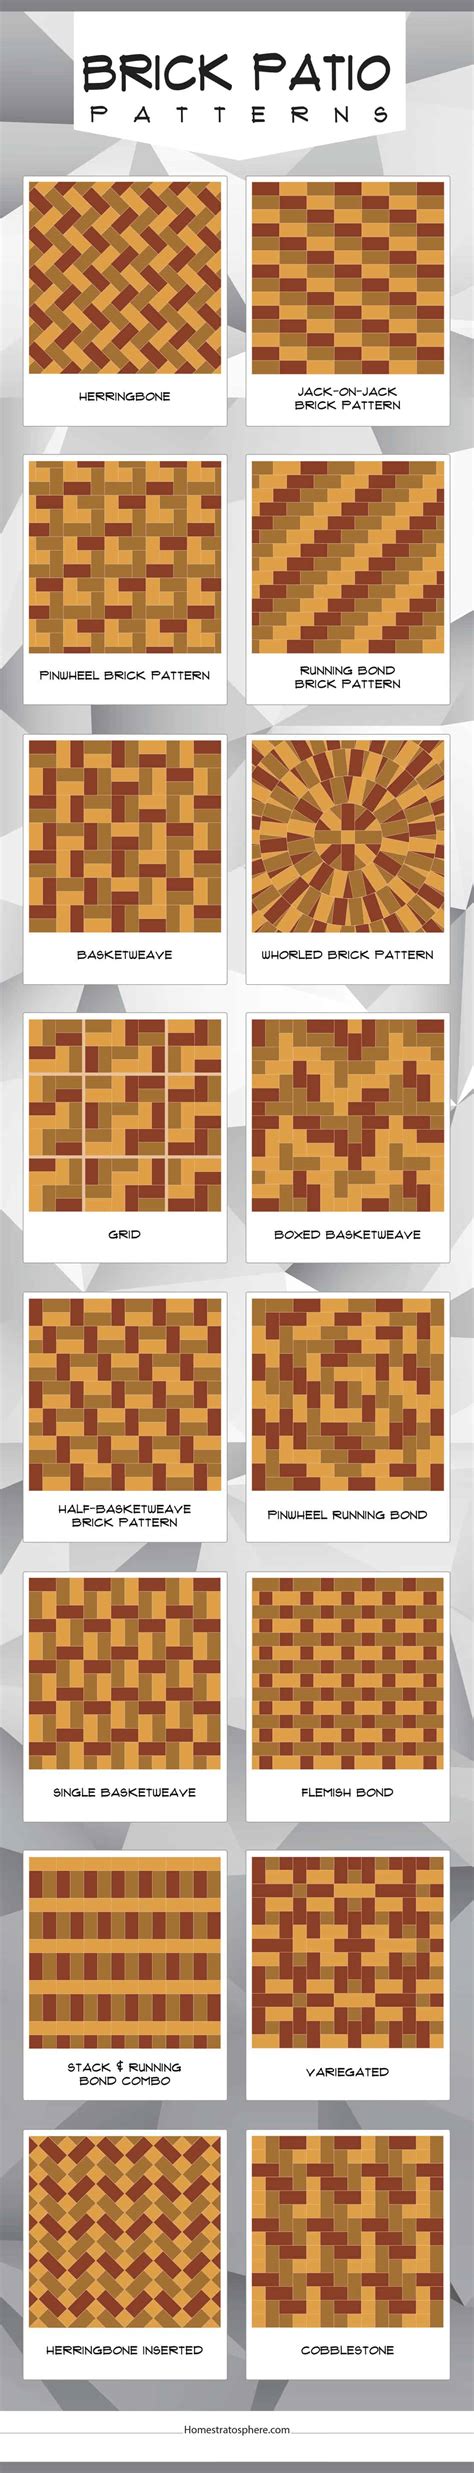 50 Brick Patio Patterns Designs And Ideas